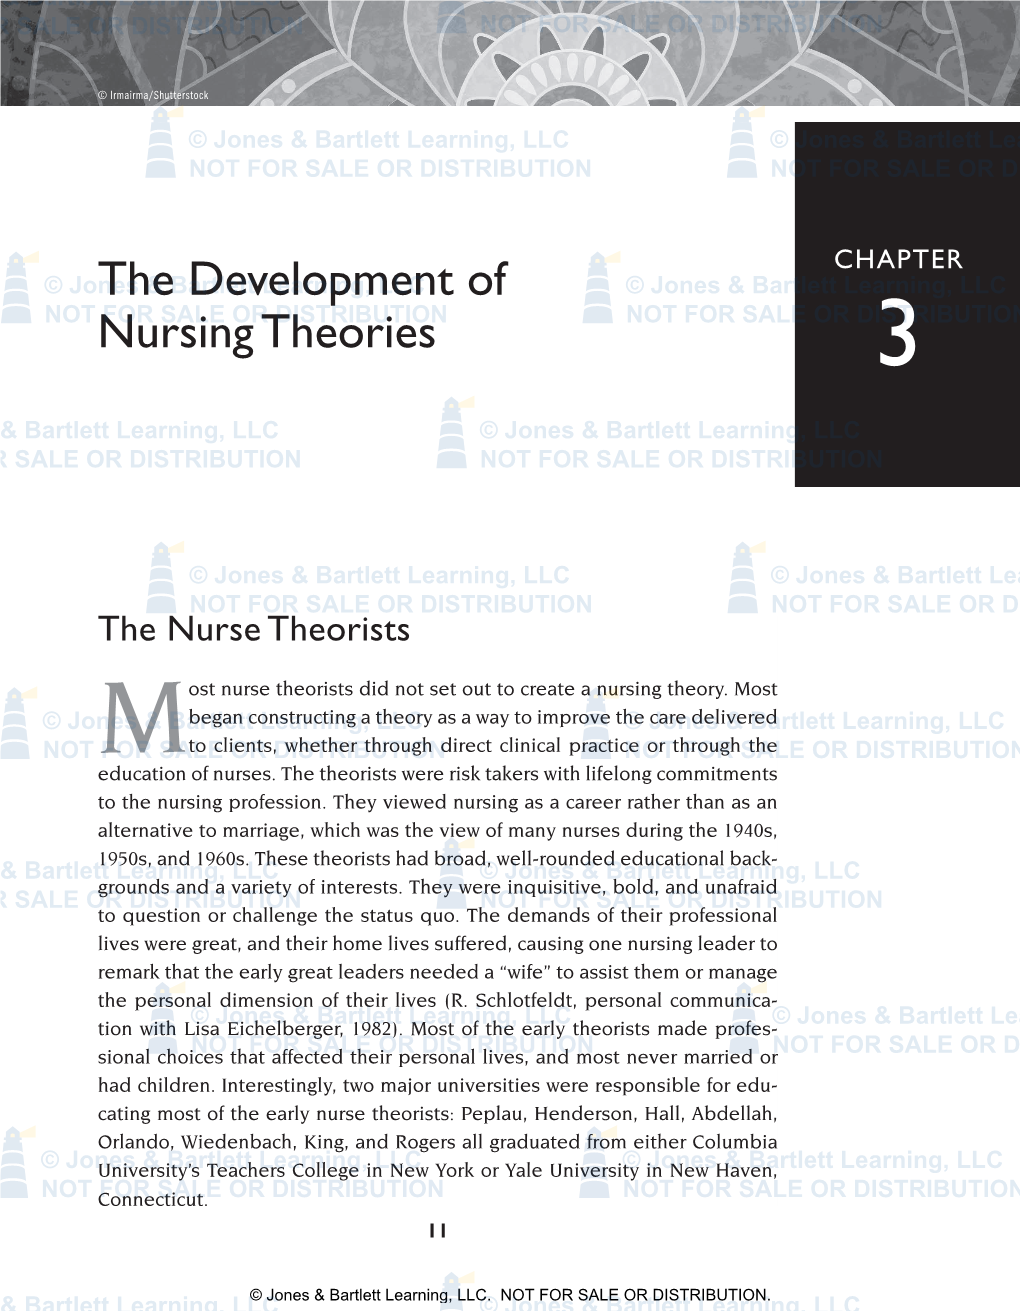 The Development of Nursing Theories